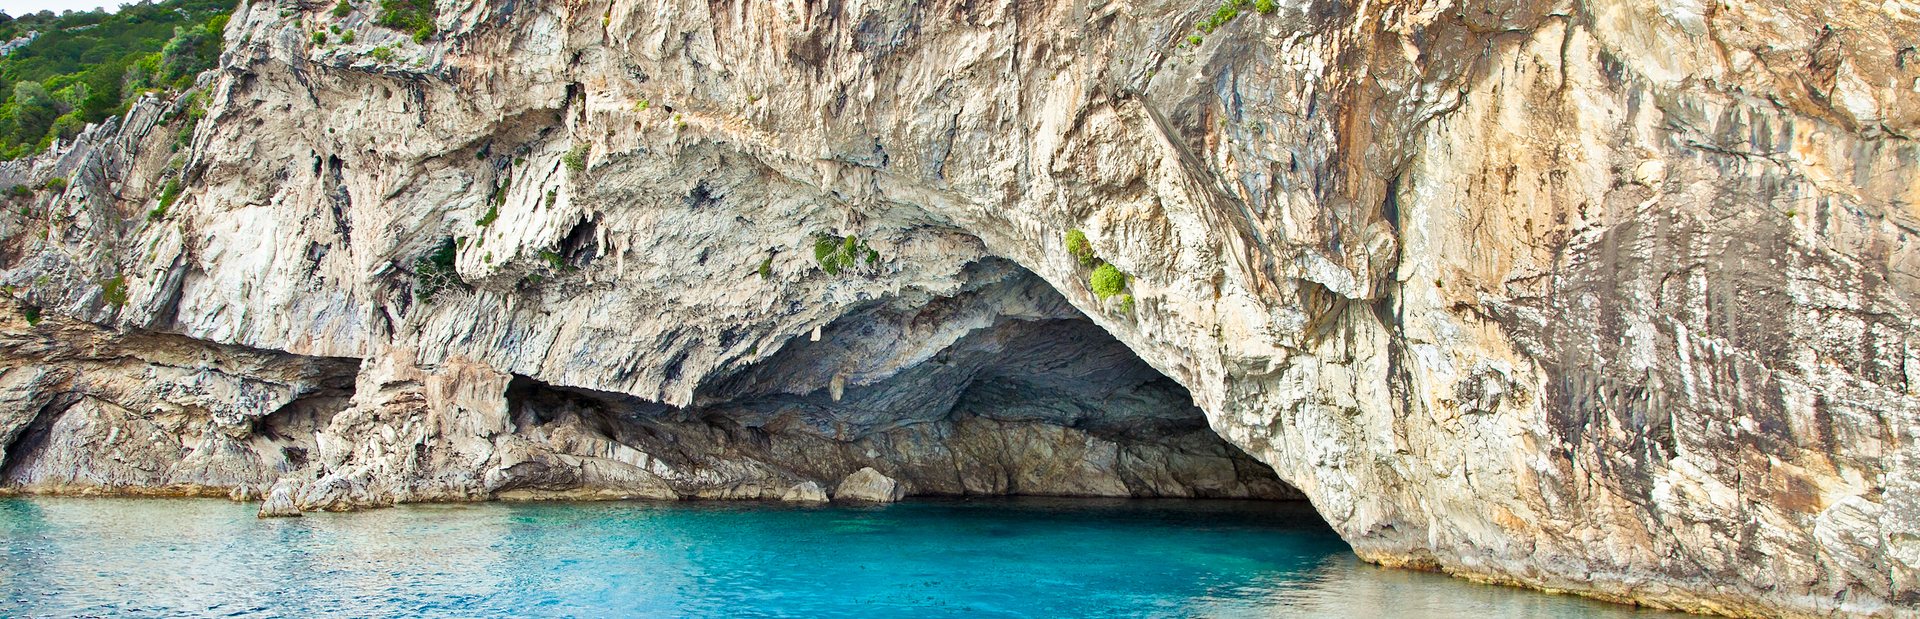 Papanikolis Sea Cave Image 1